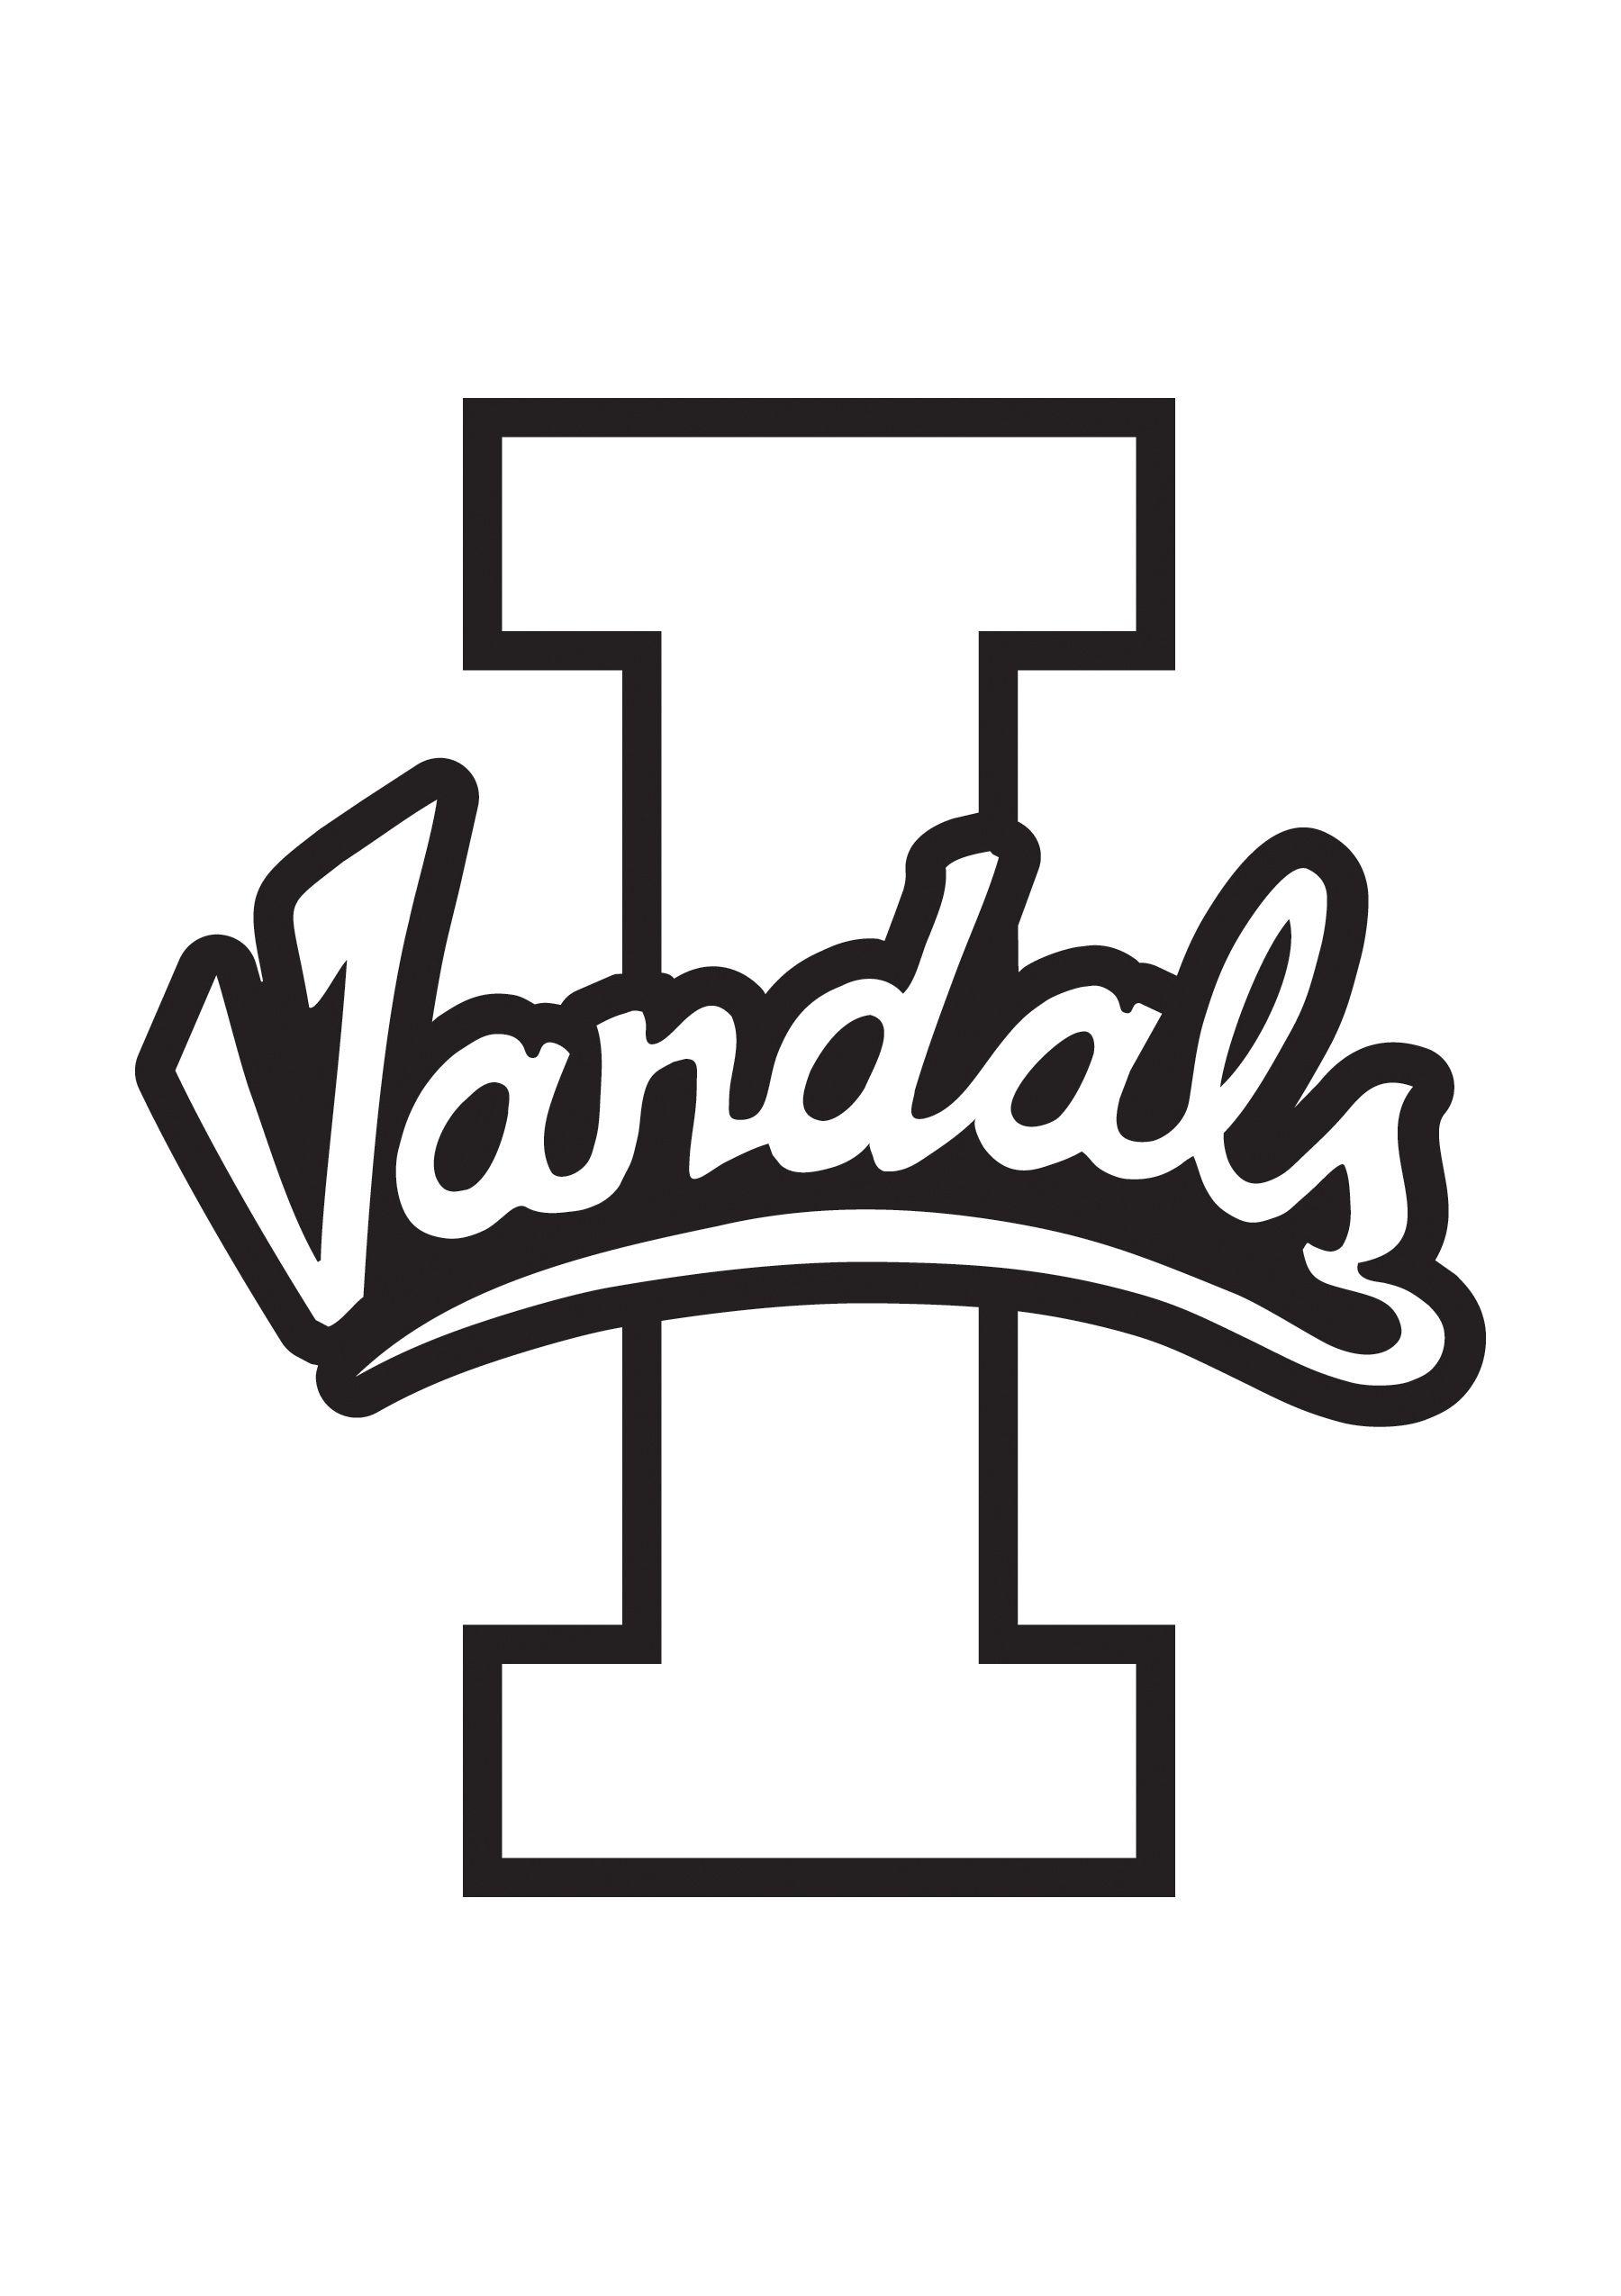 Vandals Logo - University Brand Resources Guide